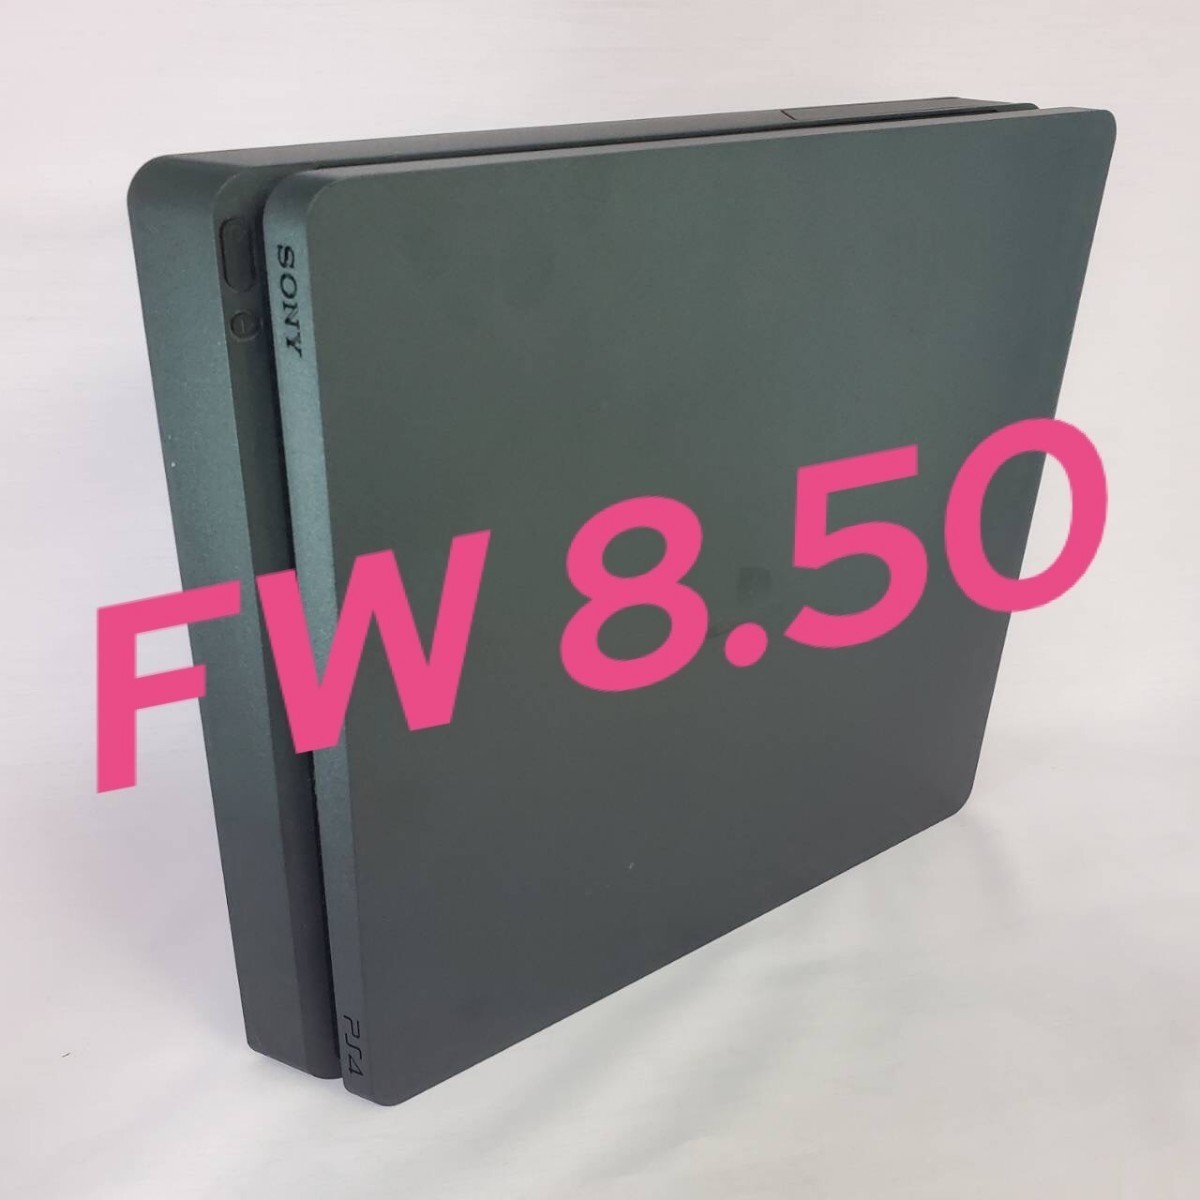 FW 8.50 Ver.8.50 CUH-2100A 動作確認済みPS4 本体ブラック封印シール